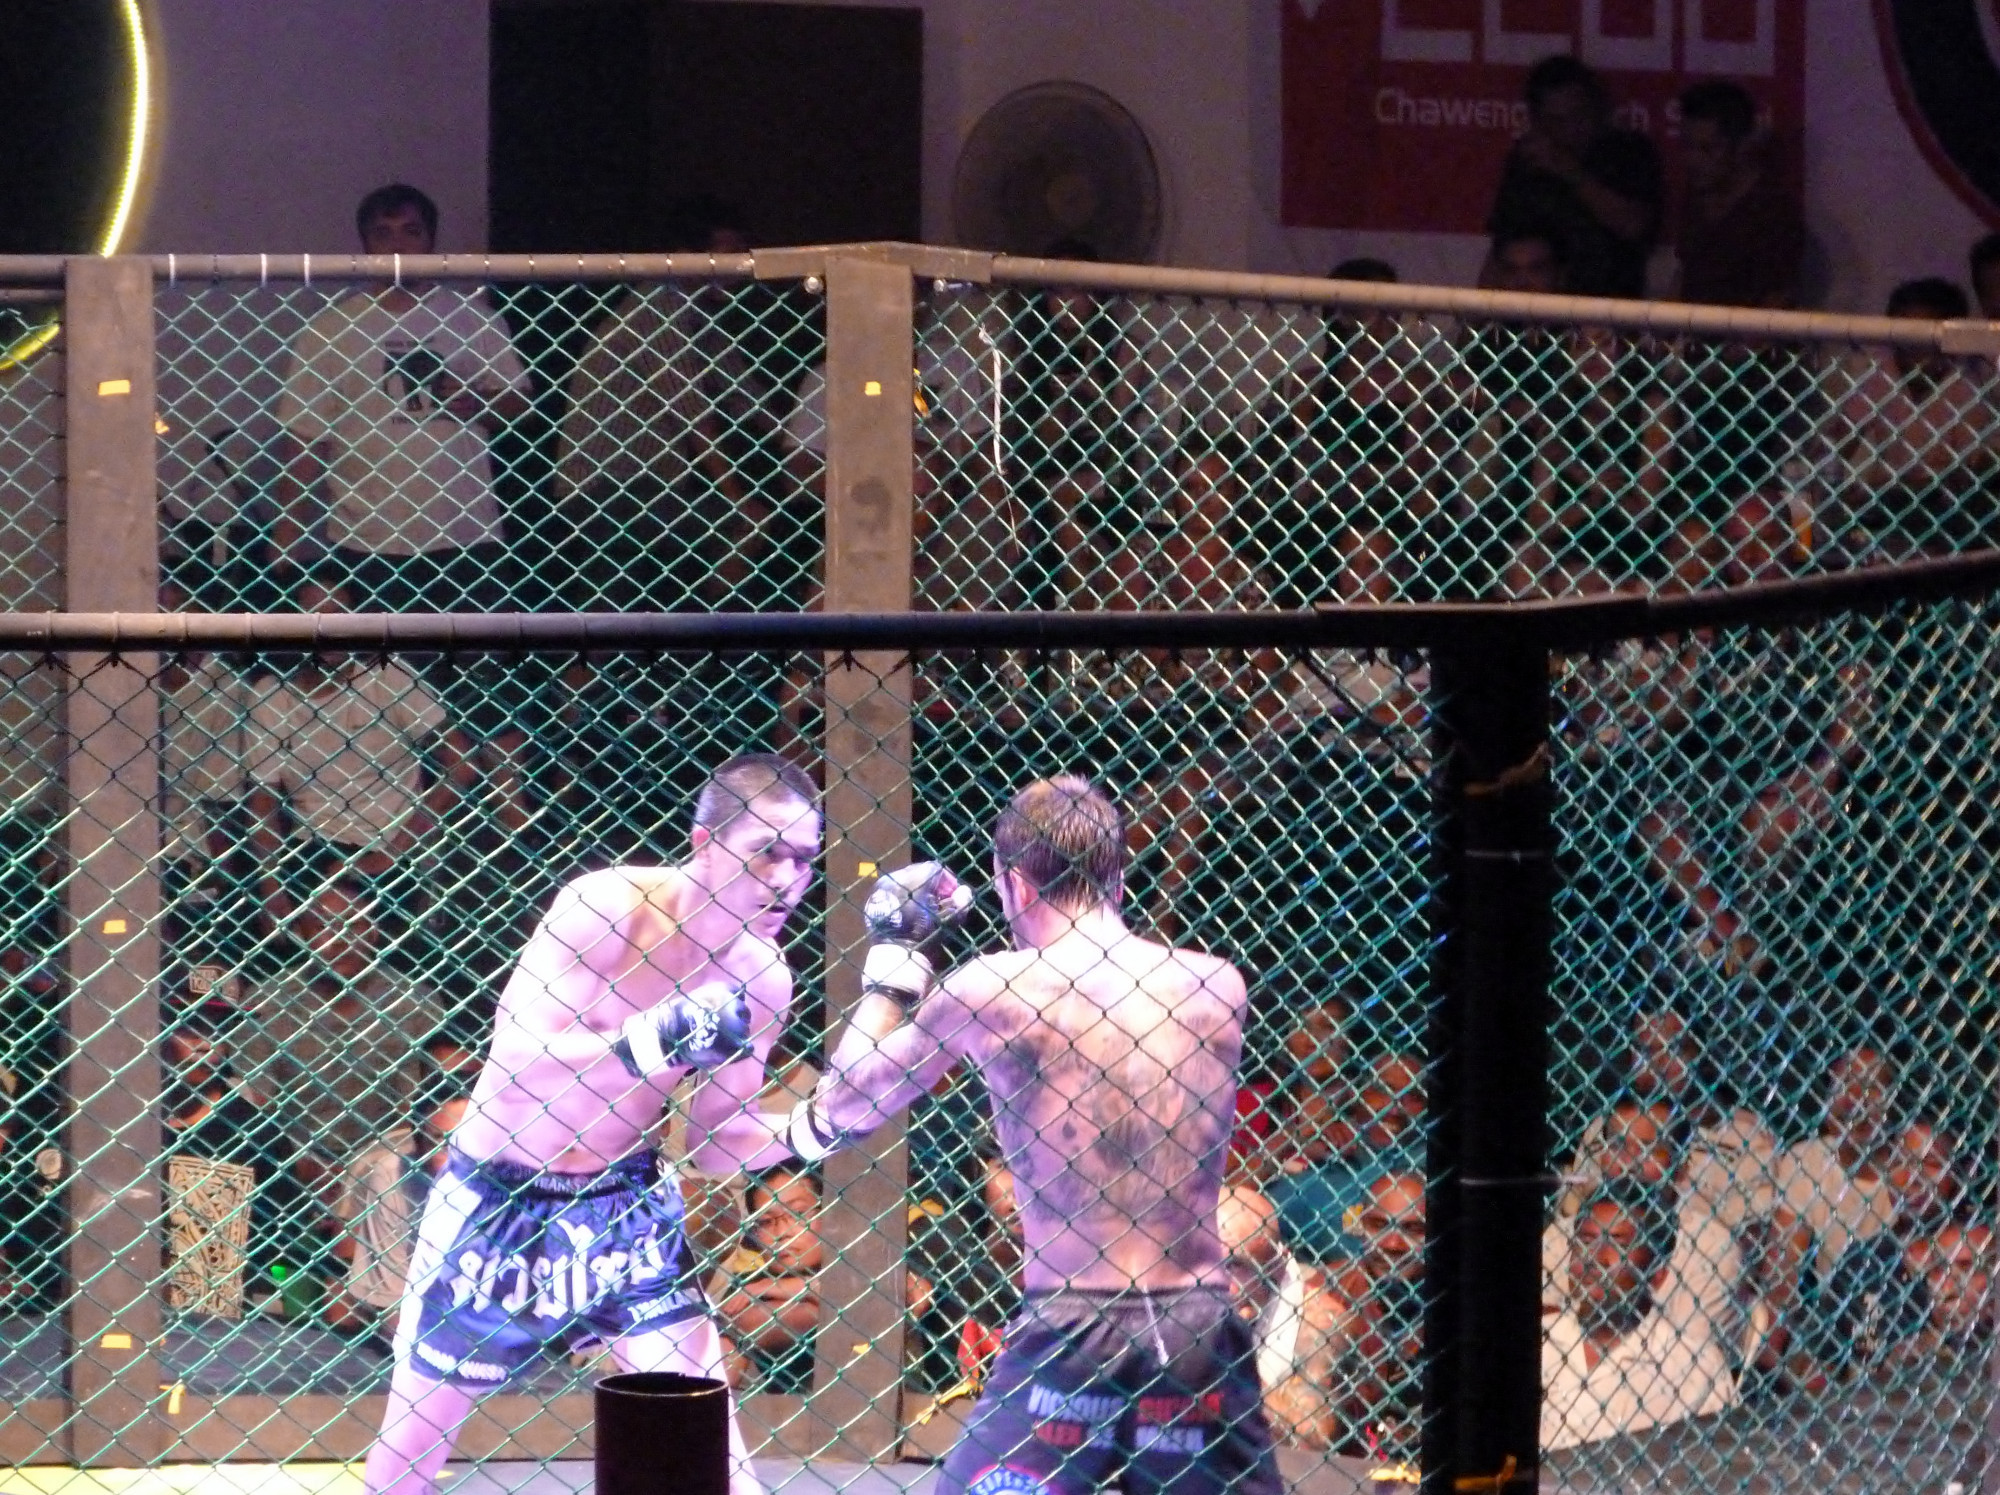 MMA fight